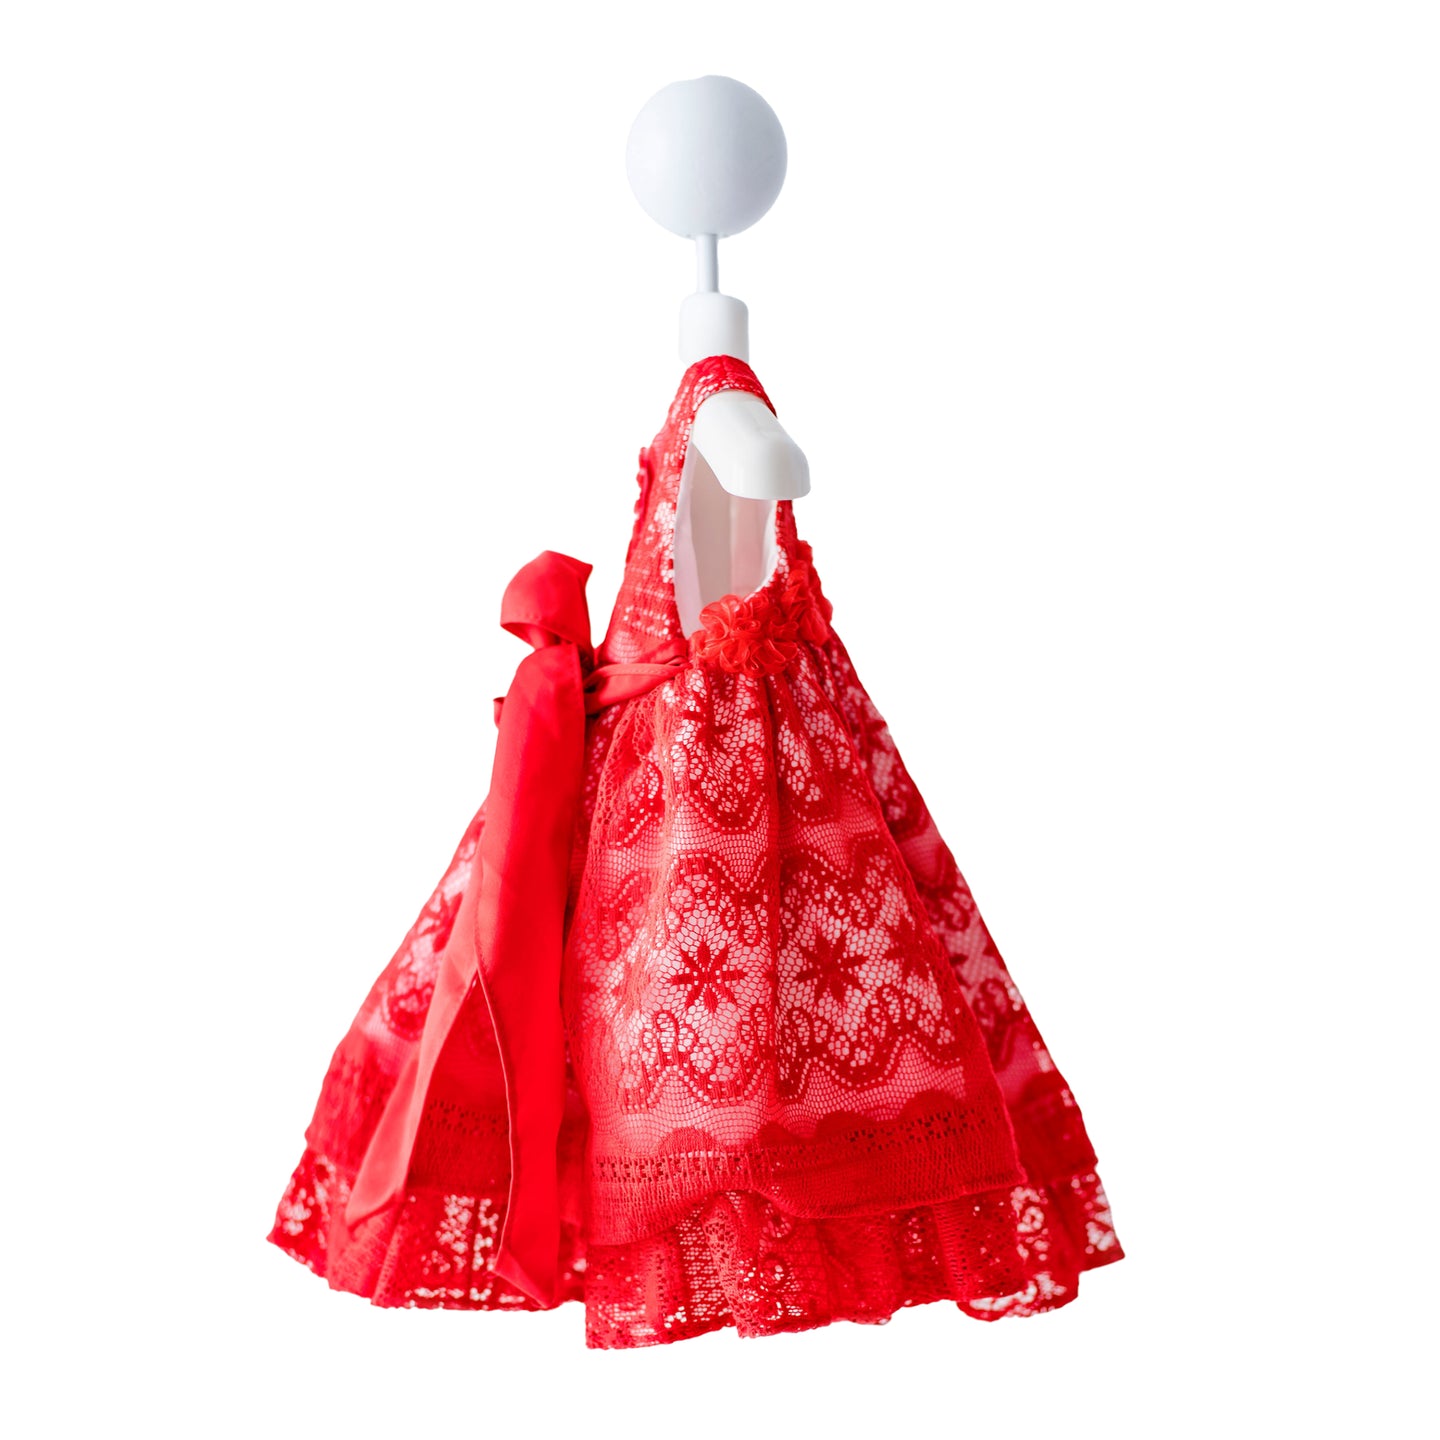 [12m] Pippa & Julie Red Dress